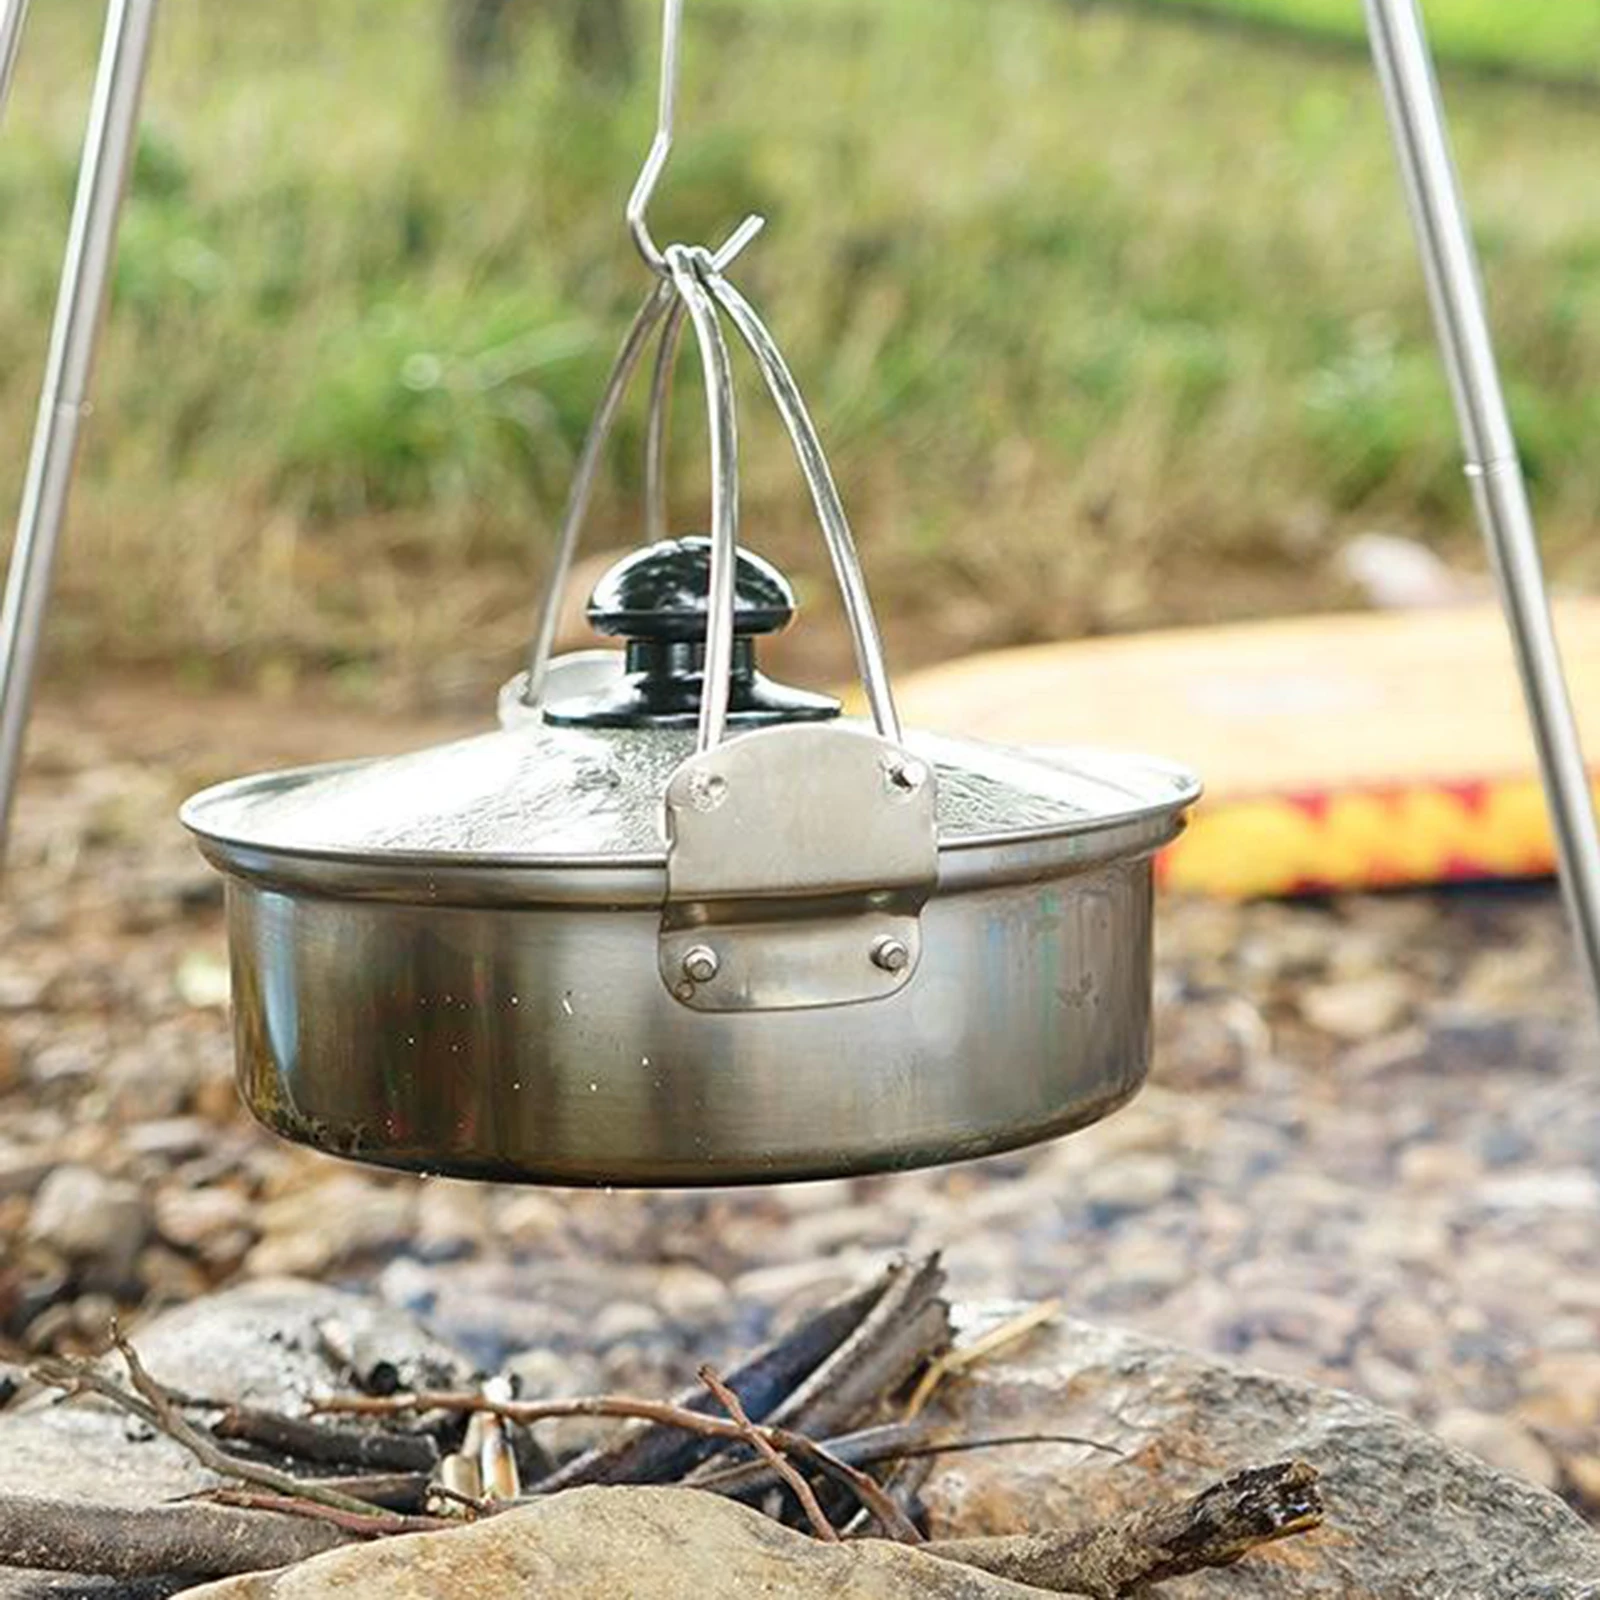 Stainless Steel Stock Pot Camping Cookware Stockpot -Campfire Korean Ramen Noodle Pot Sauce Stew Pans for Travel Outdoor Cooking